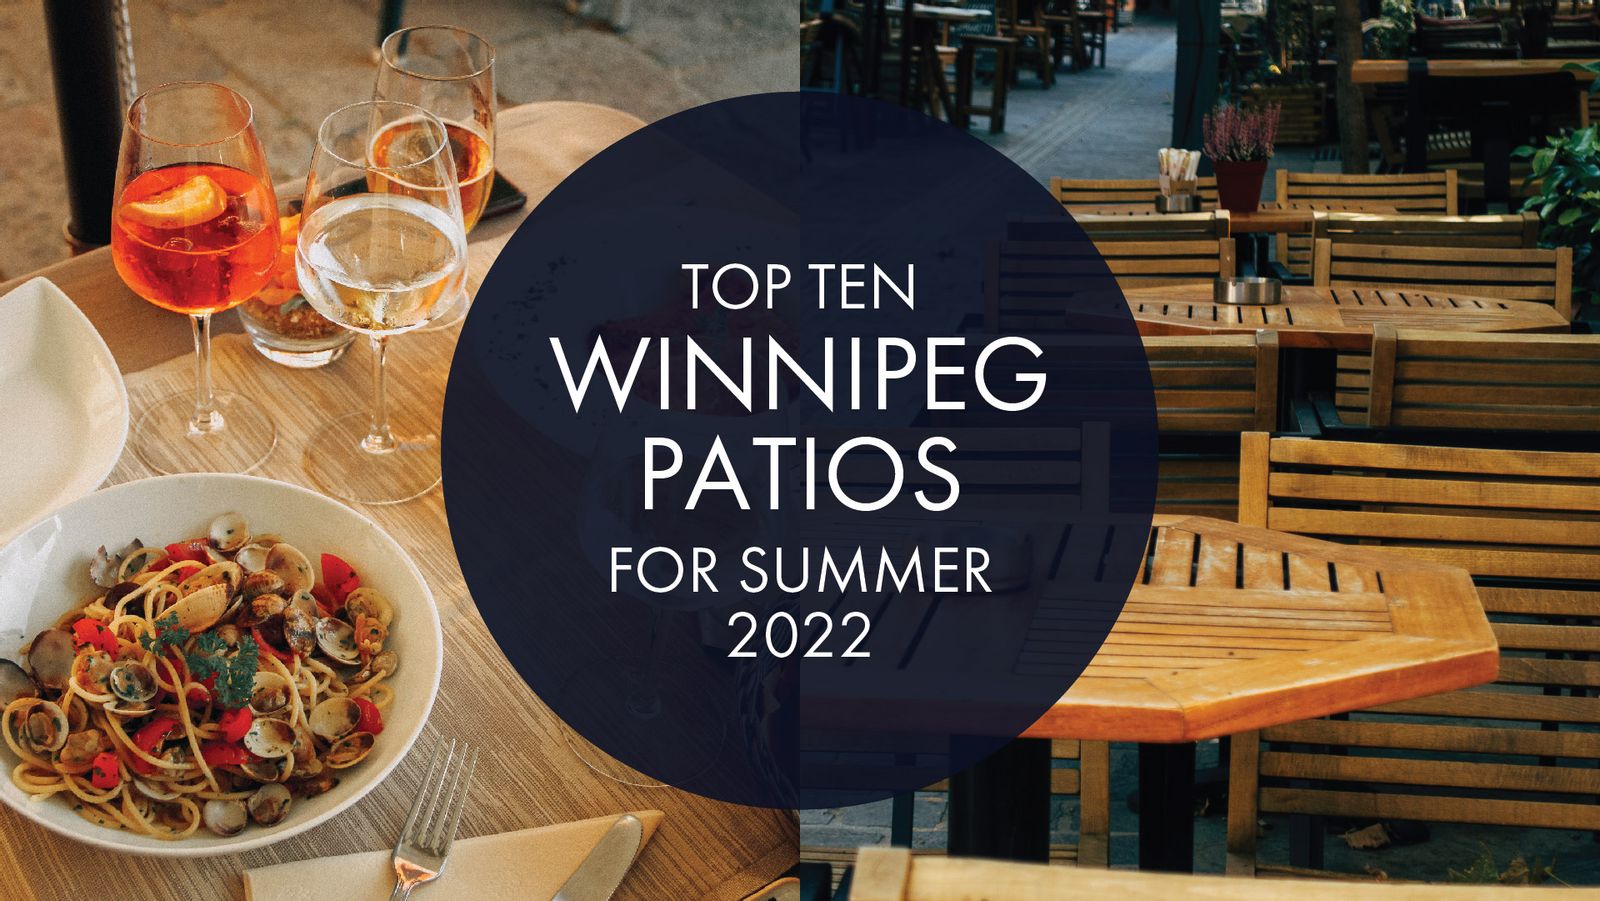 Top Ten Winnipeg Patios for Summer 2022